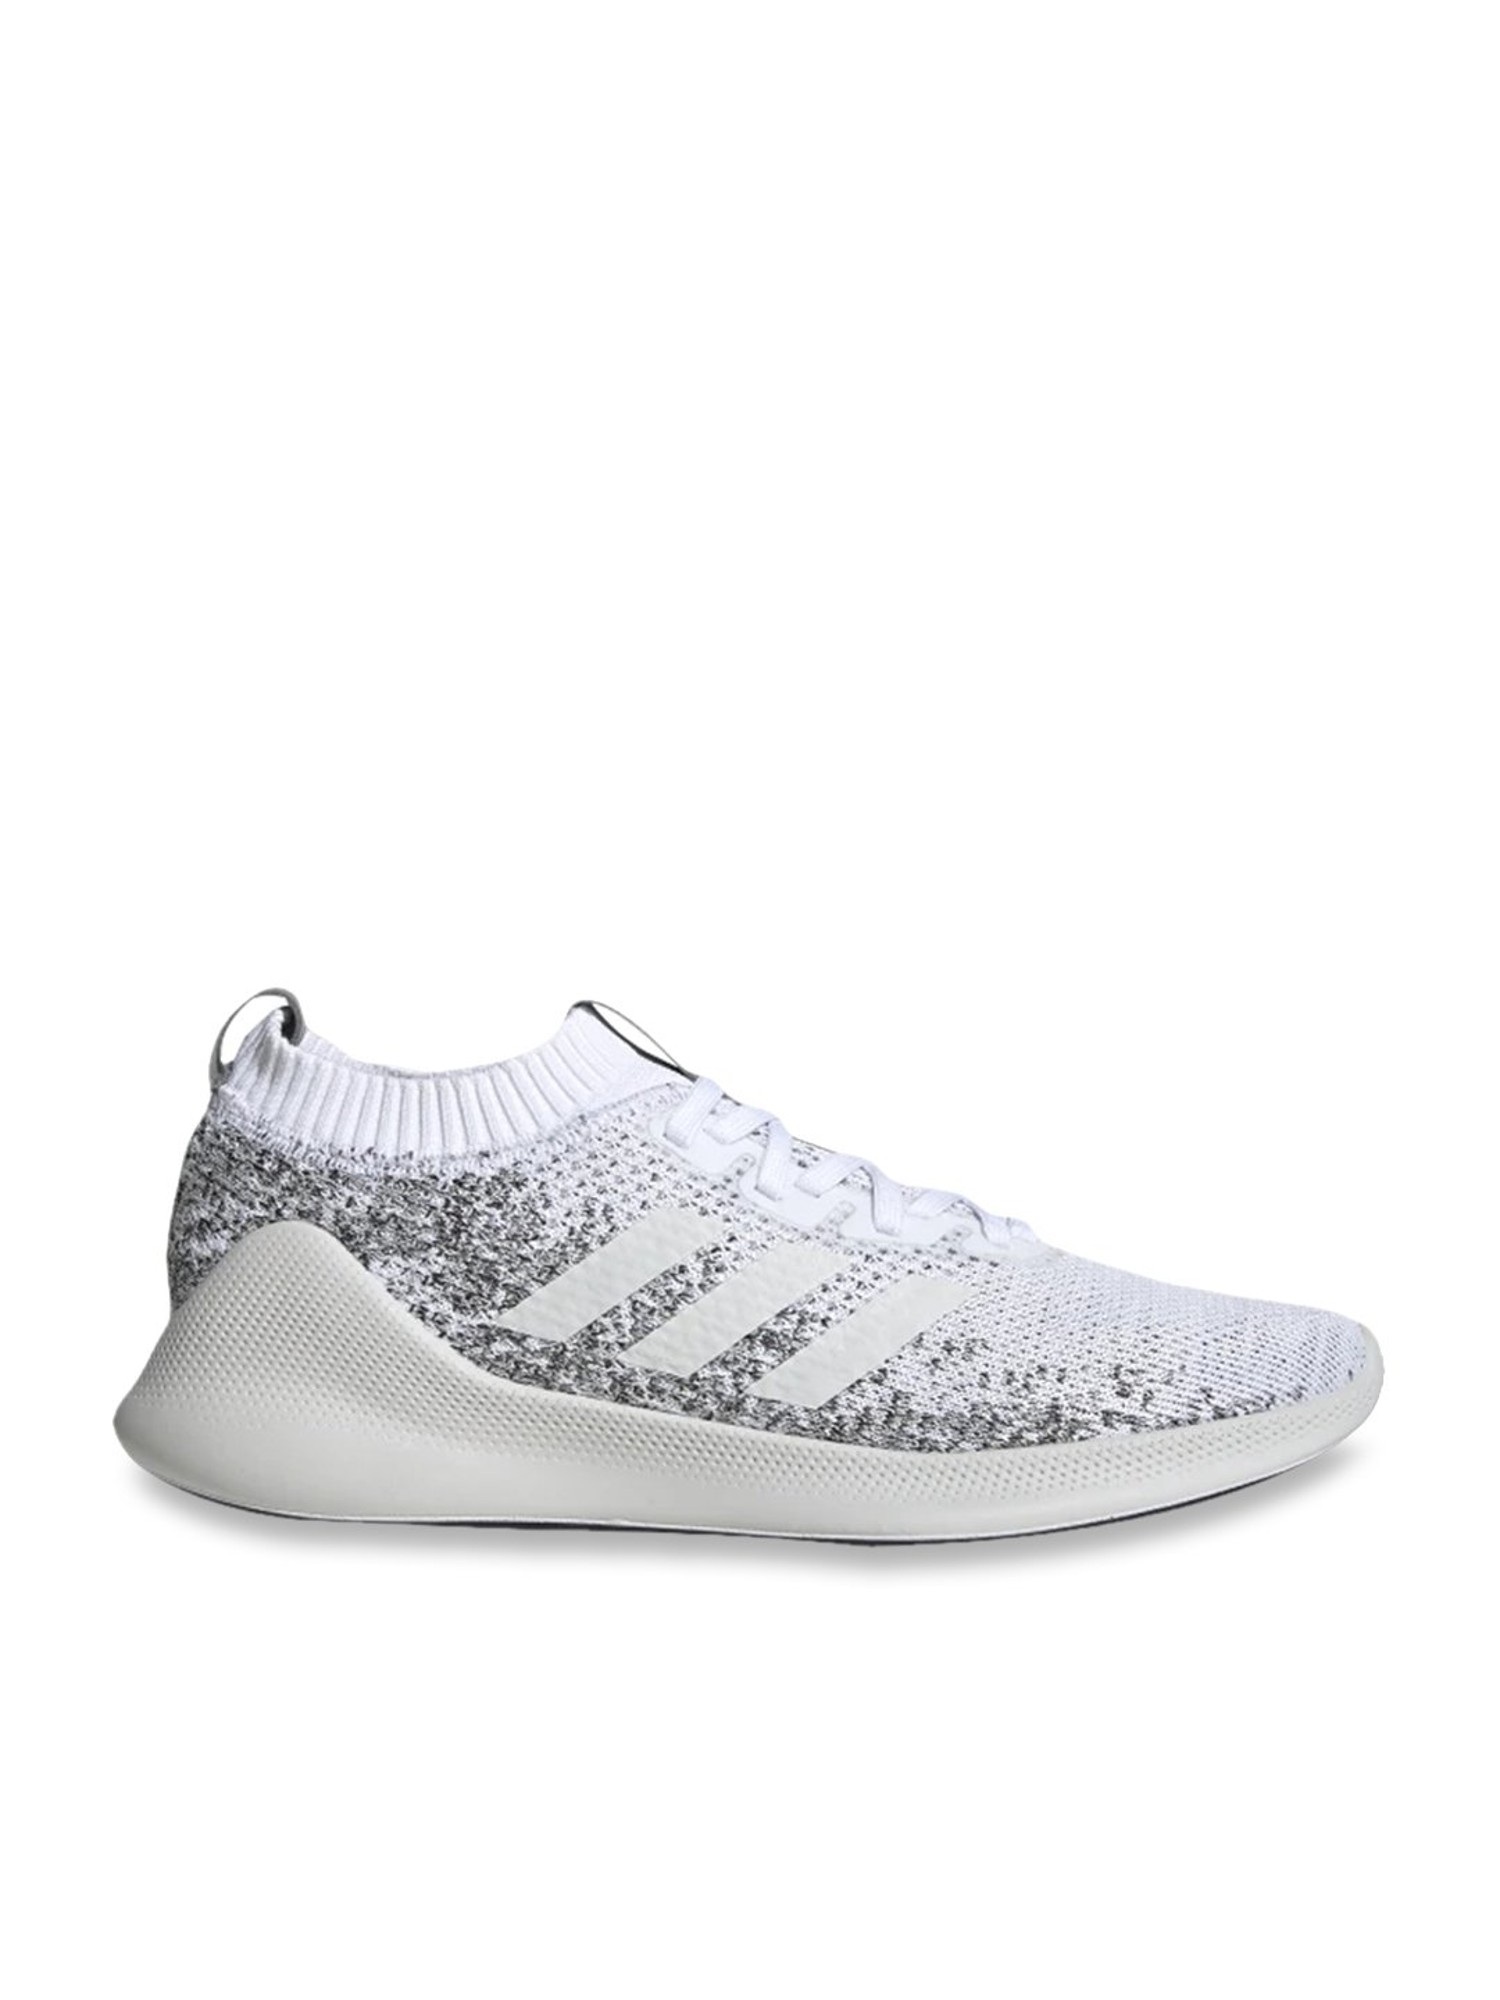 Adidas Purebounce White Running Shoes 